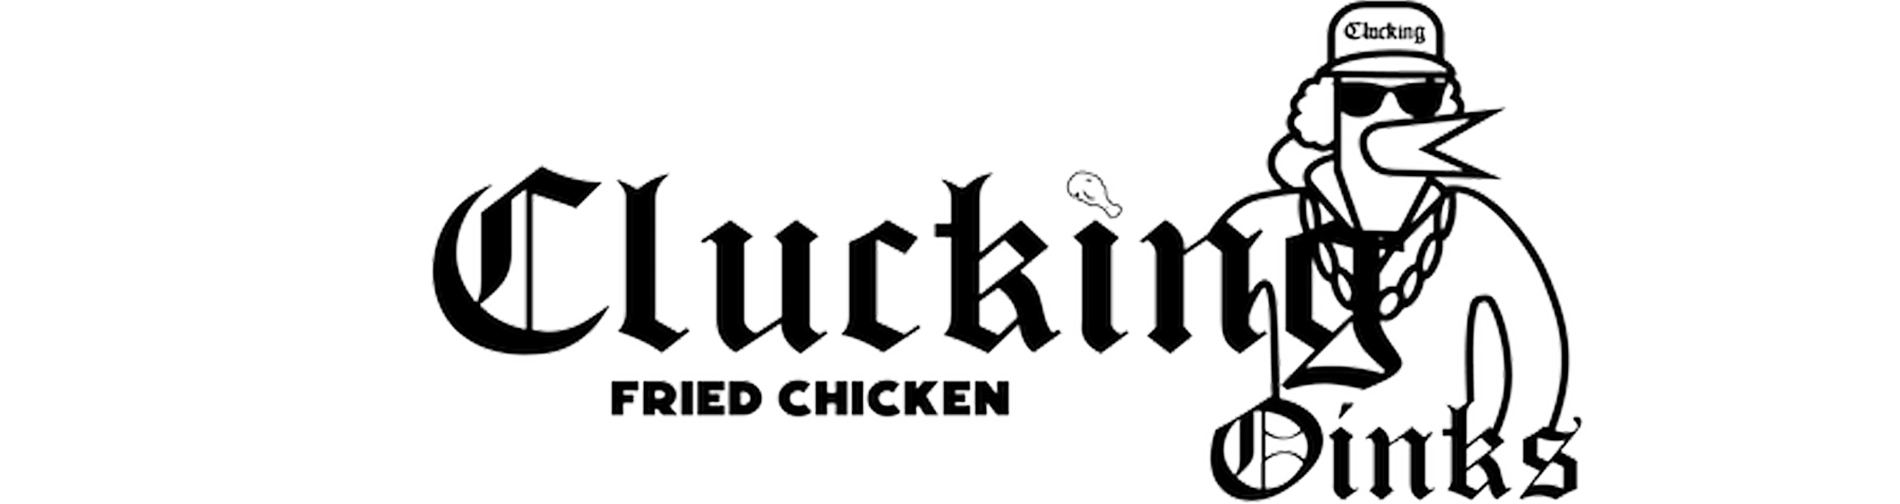 cluckingfriedchicken2